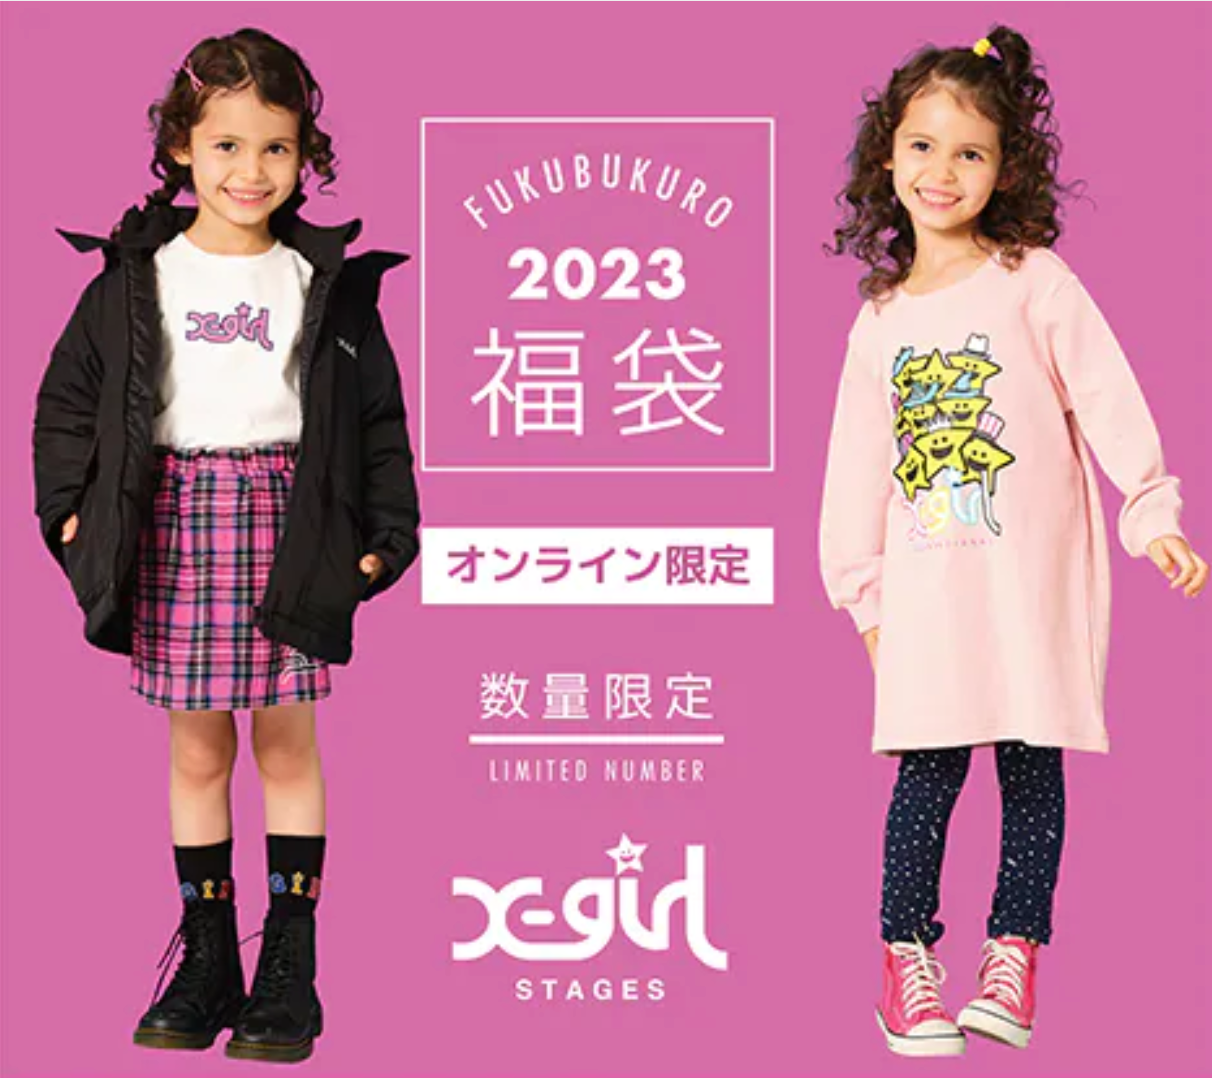 【2023年福袋】X-girl Stages WEB限定GIRLS福袋